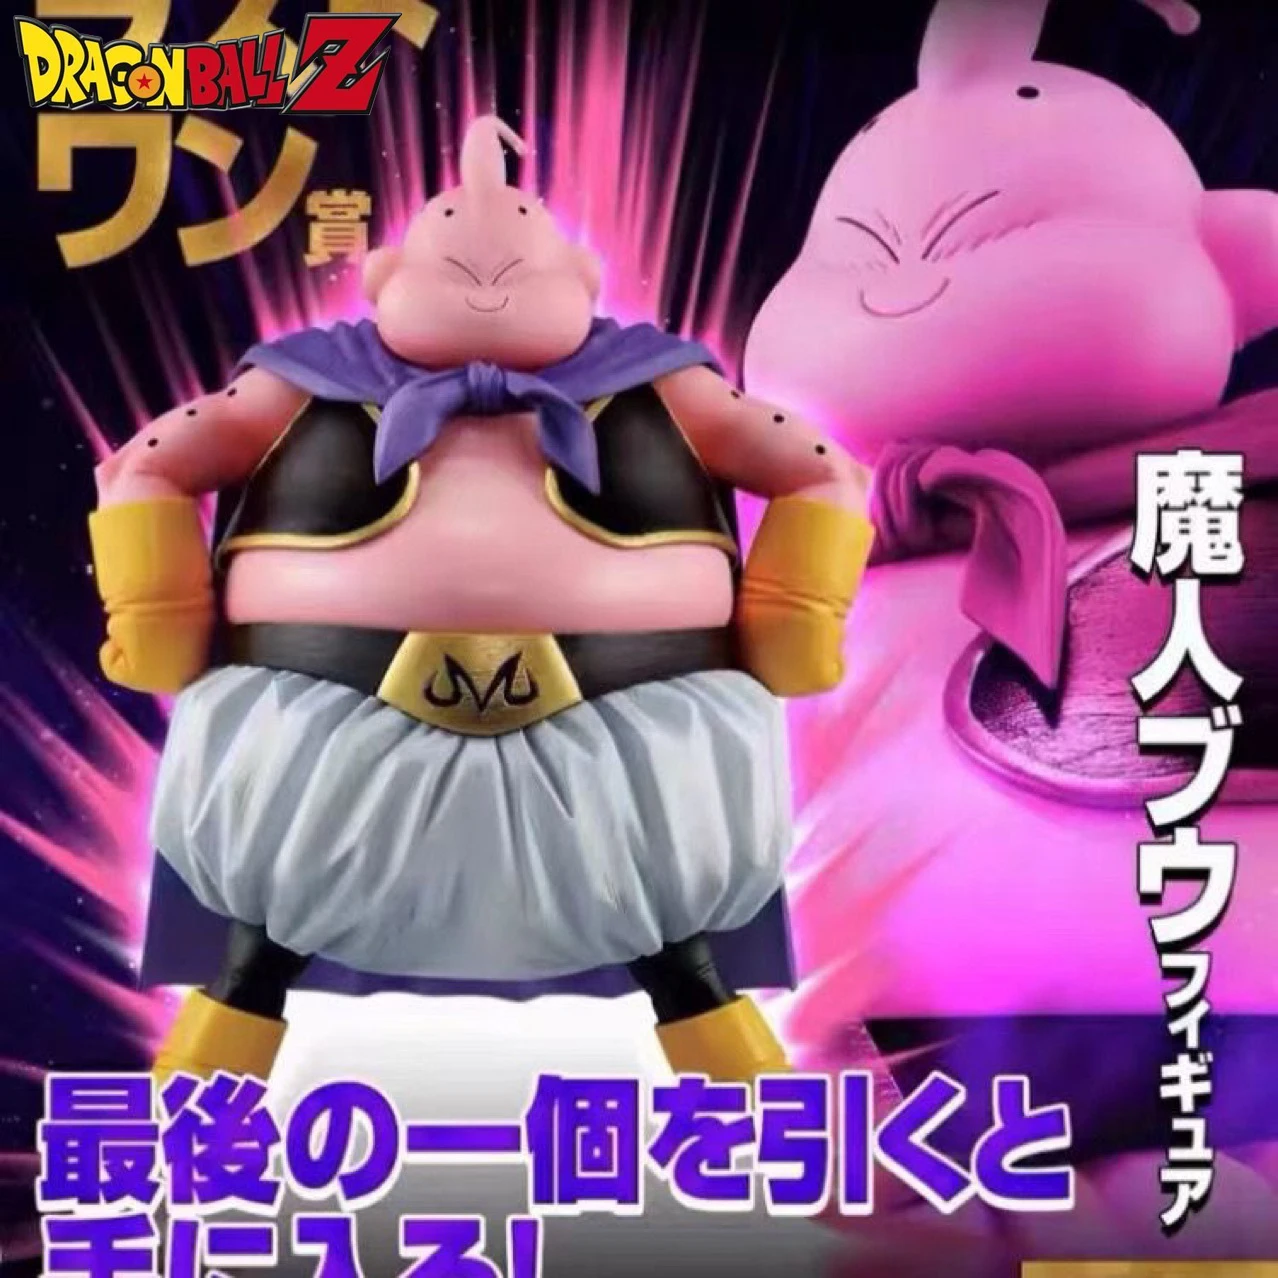 

30cm Anime Dragon Ball Z Fat Majin Buu Figure GK 3 Heads Manga Statue Pvc DBZ Collection Model Action Figurine Toy Gift